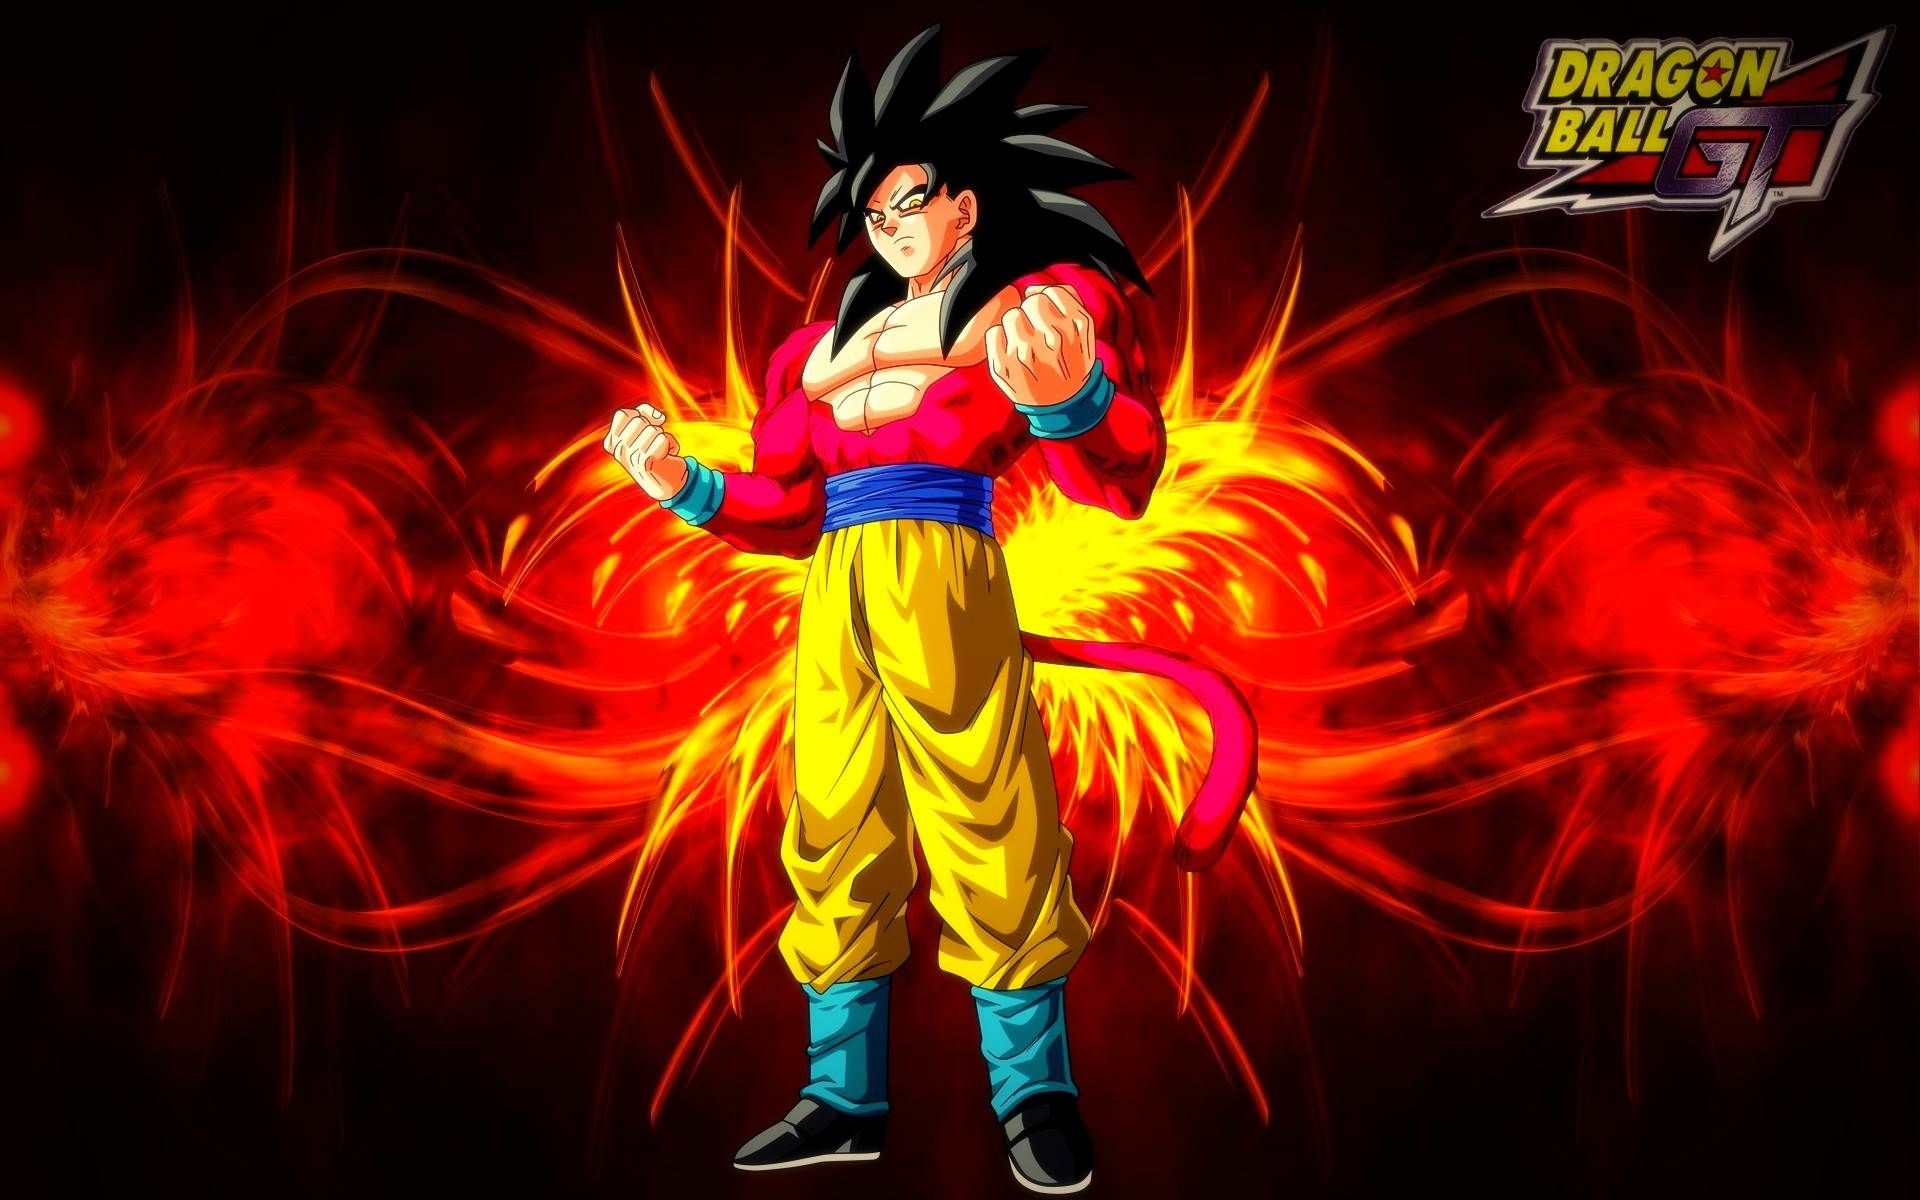 Goku Super Saiyan Wallpaper Free Goku Super Saiyan Background